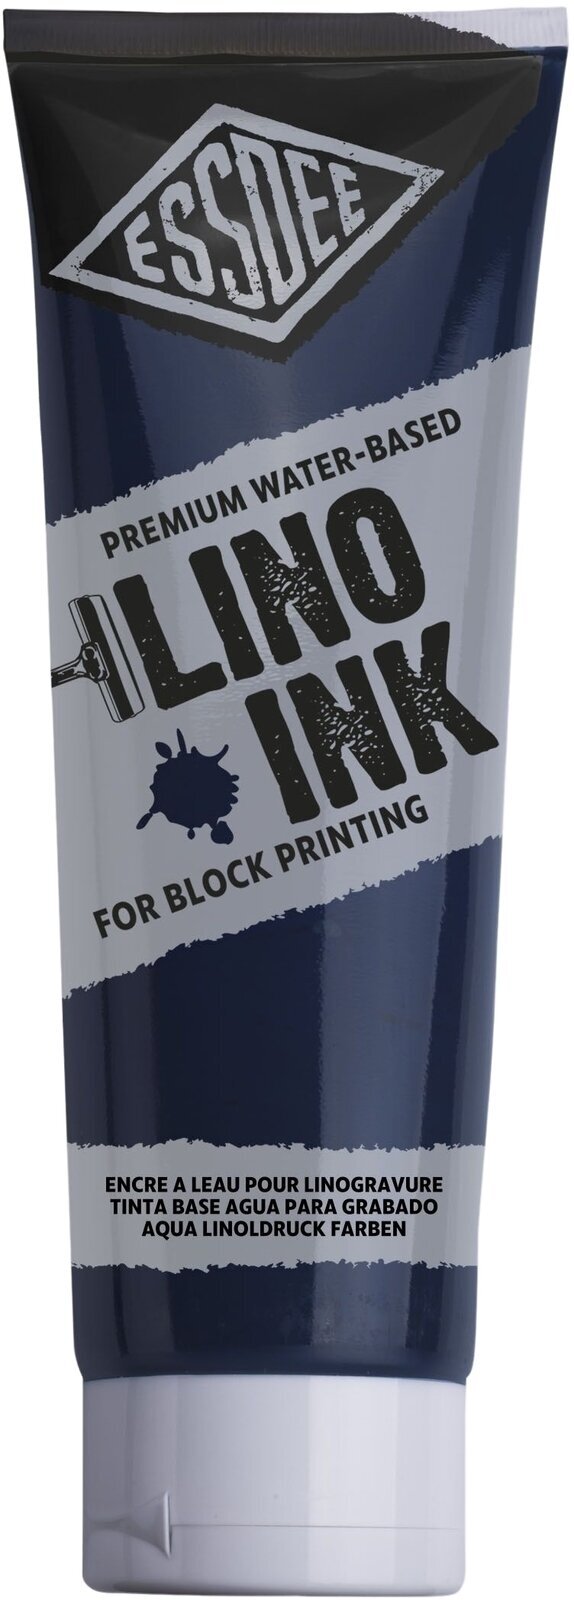 Vernice per linoleografia Essdee Block Printing Ink Vernice per linoleografia Prussian Blue 300 ml